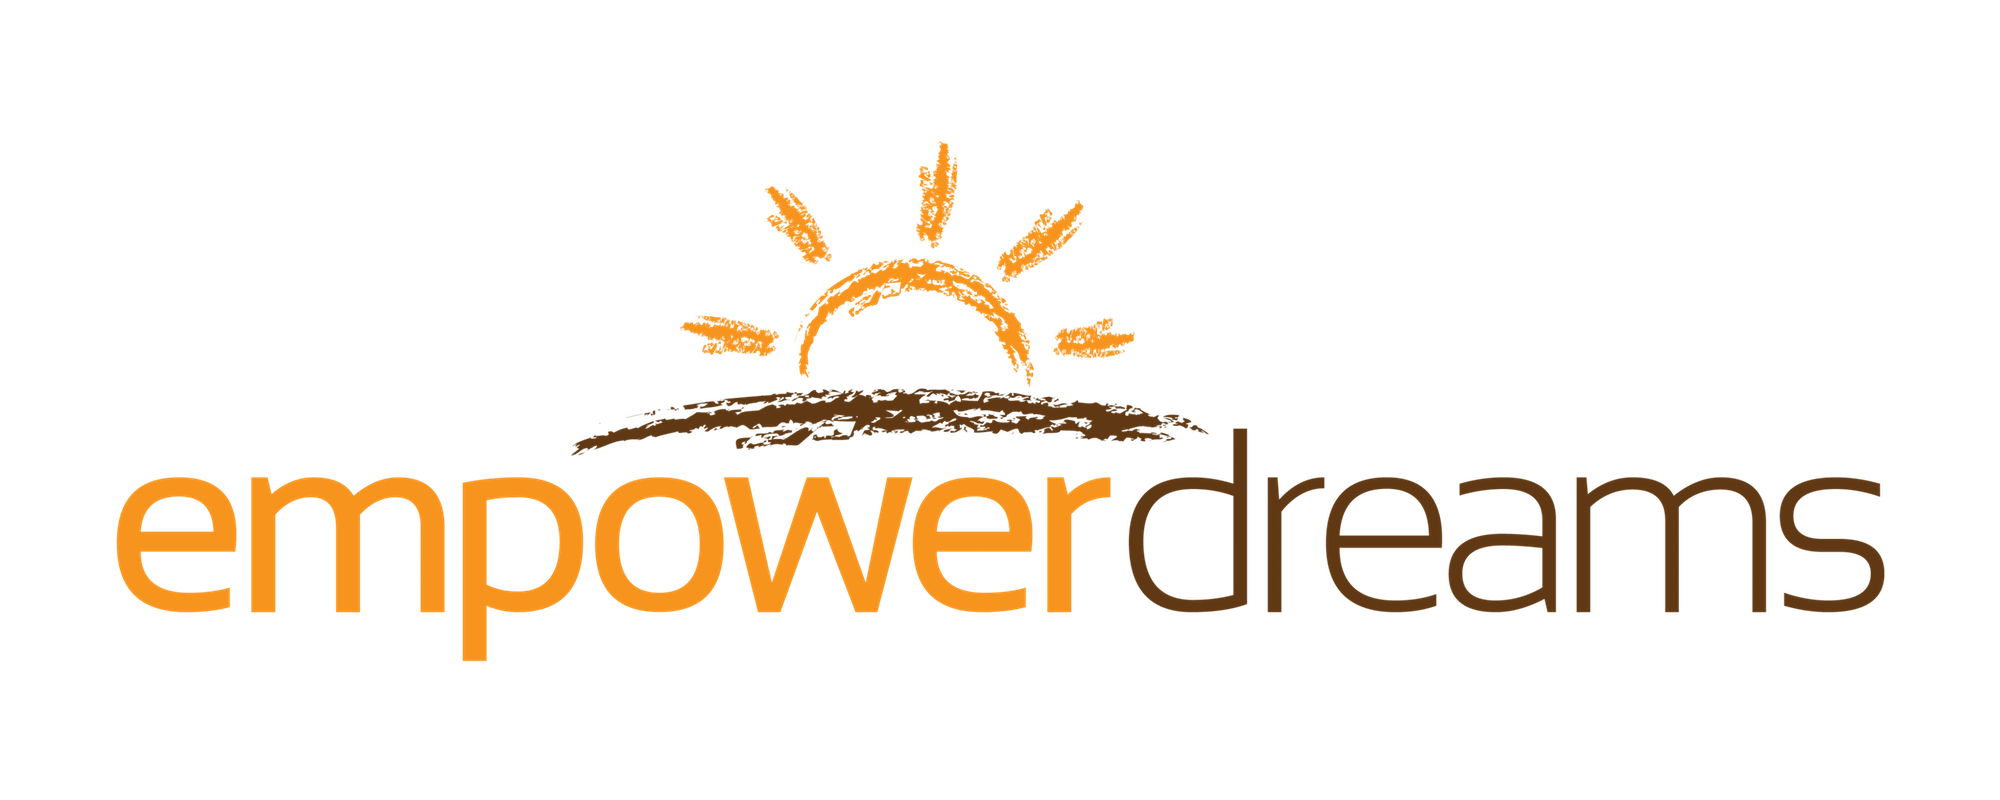 Empower Dreams Inc logo